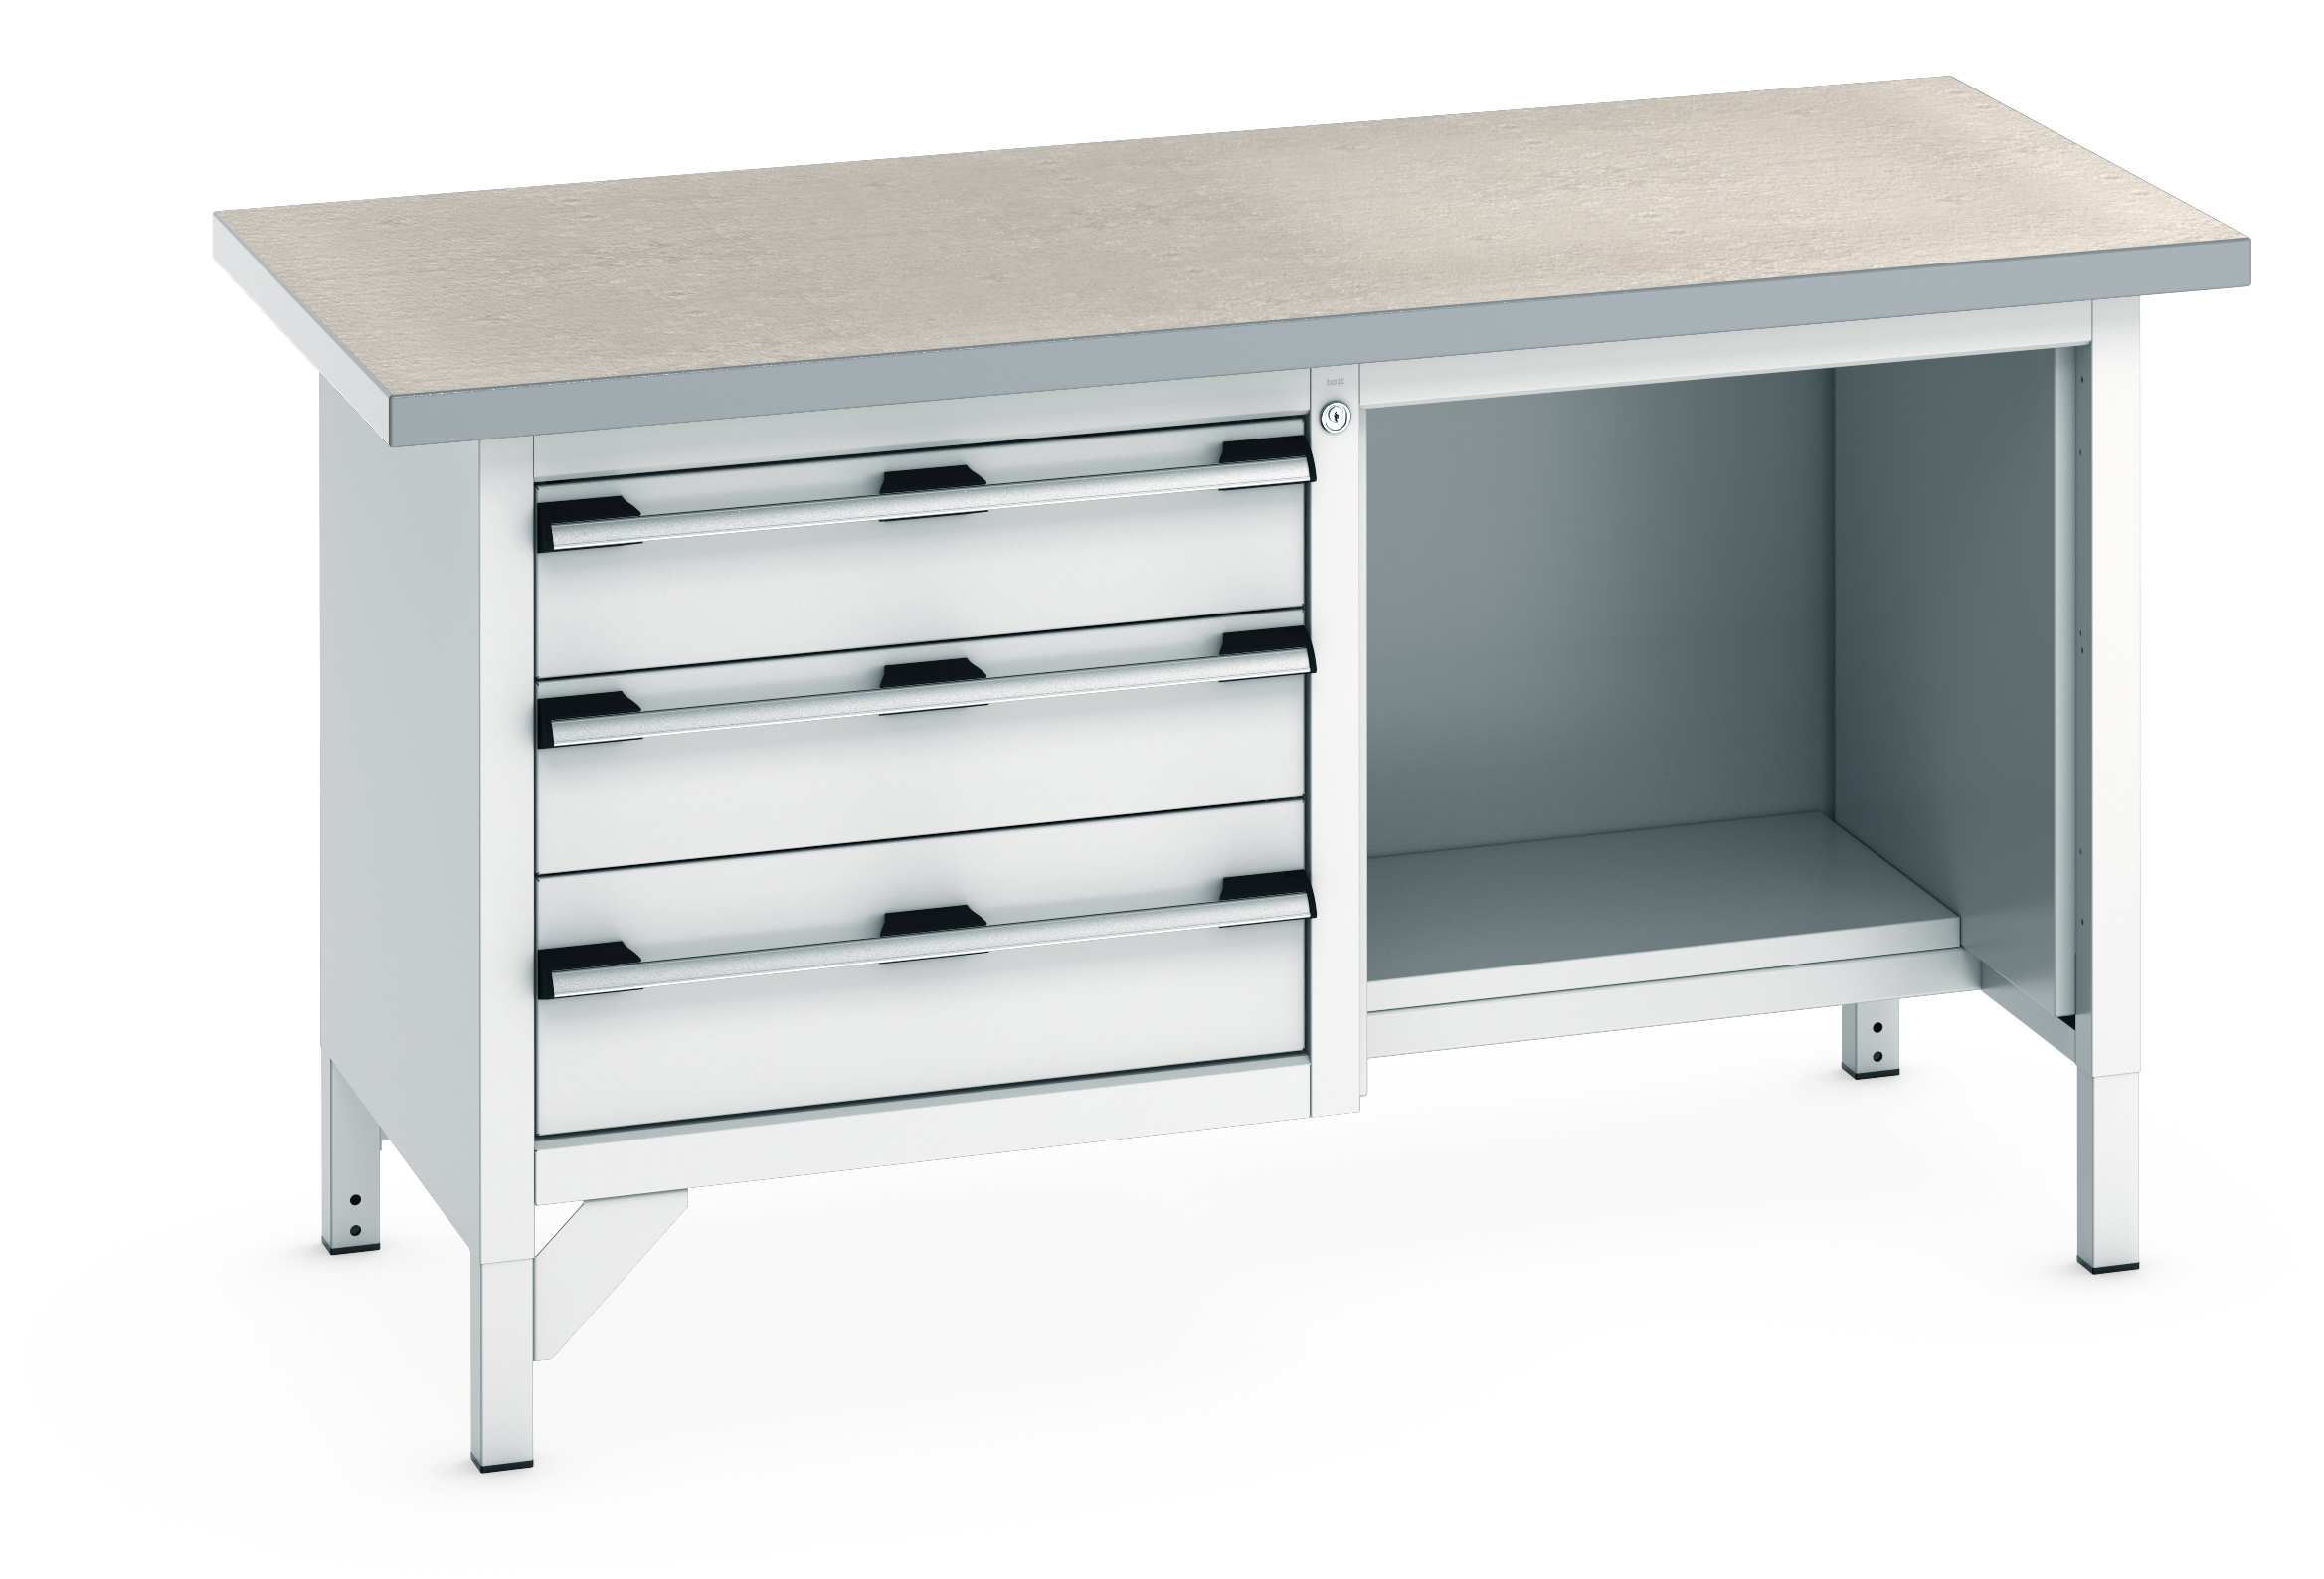 Bott Cubio Storage Bench With 3 Drawer Cabinet / Open With Half Depth Base Shelf - 41002042.16V